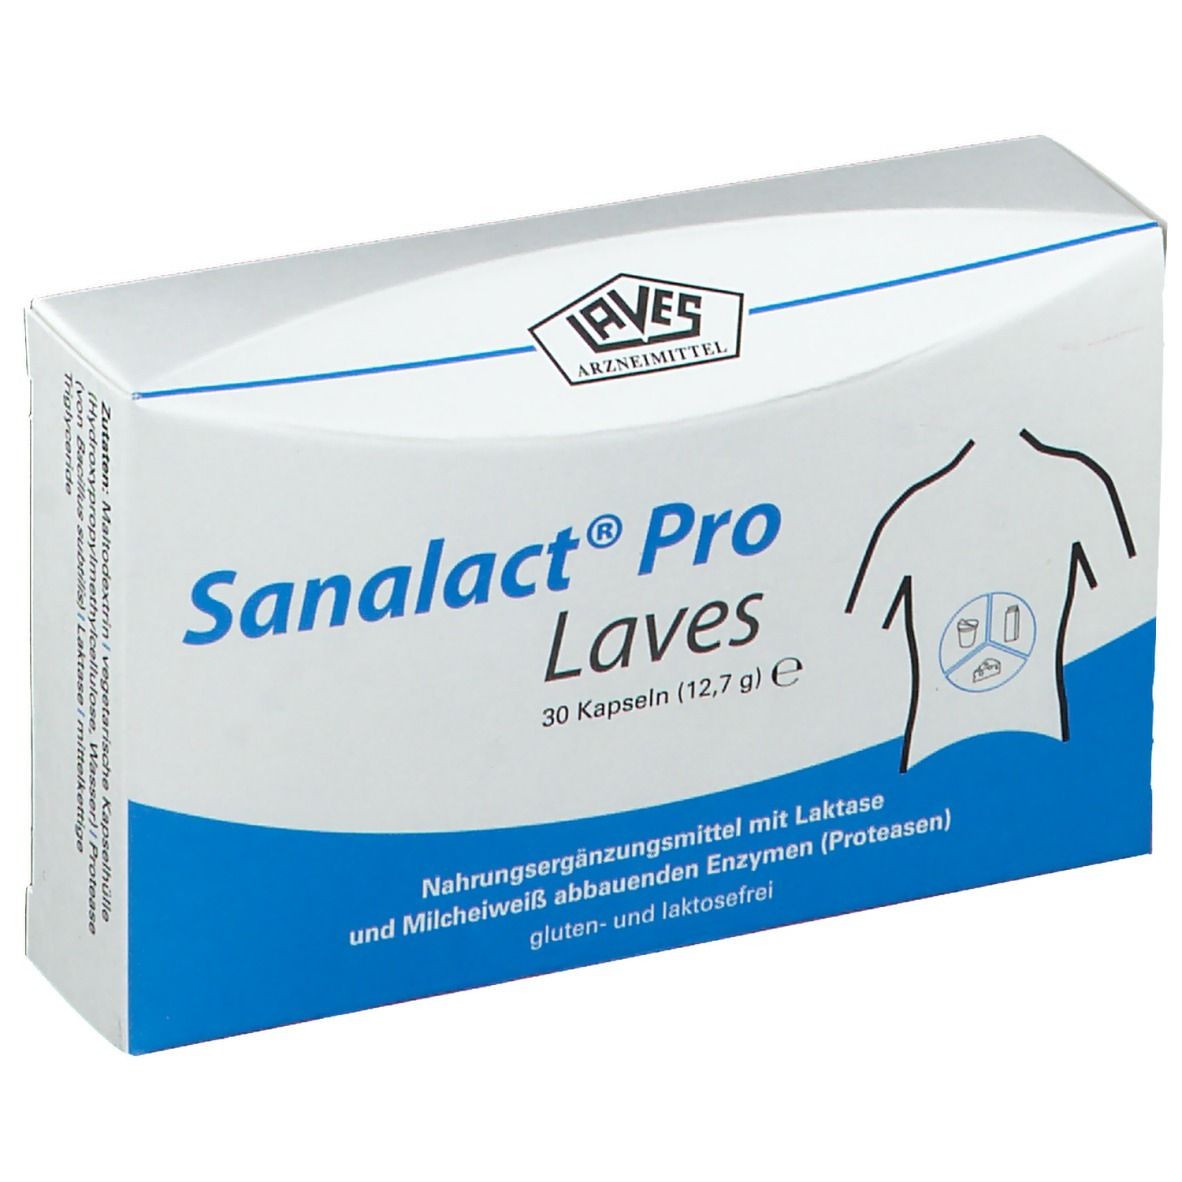 Sanalact® Pro Laves